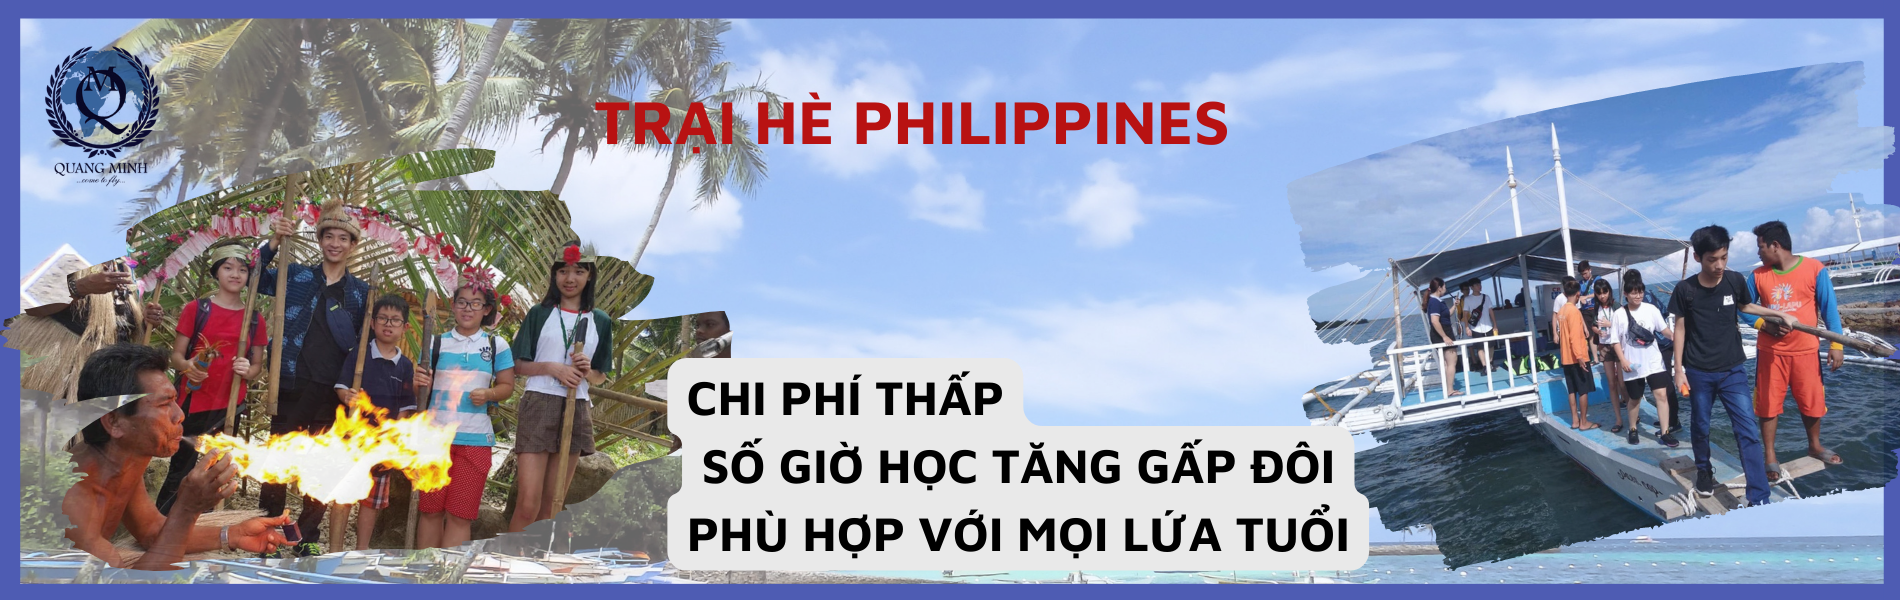 trai-he-philippines